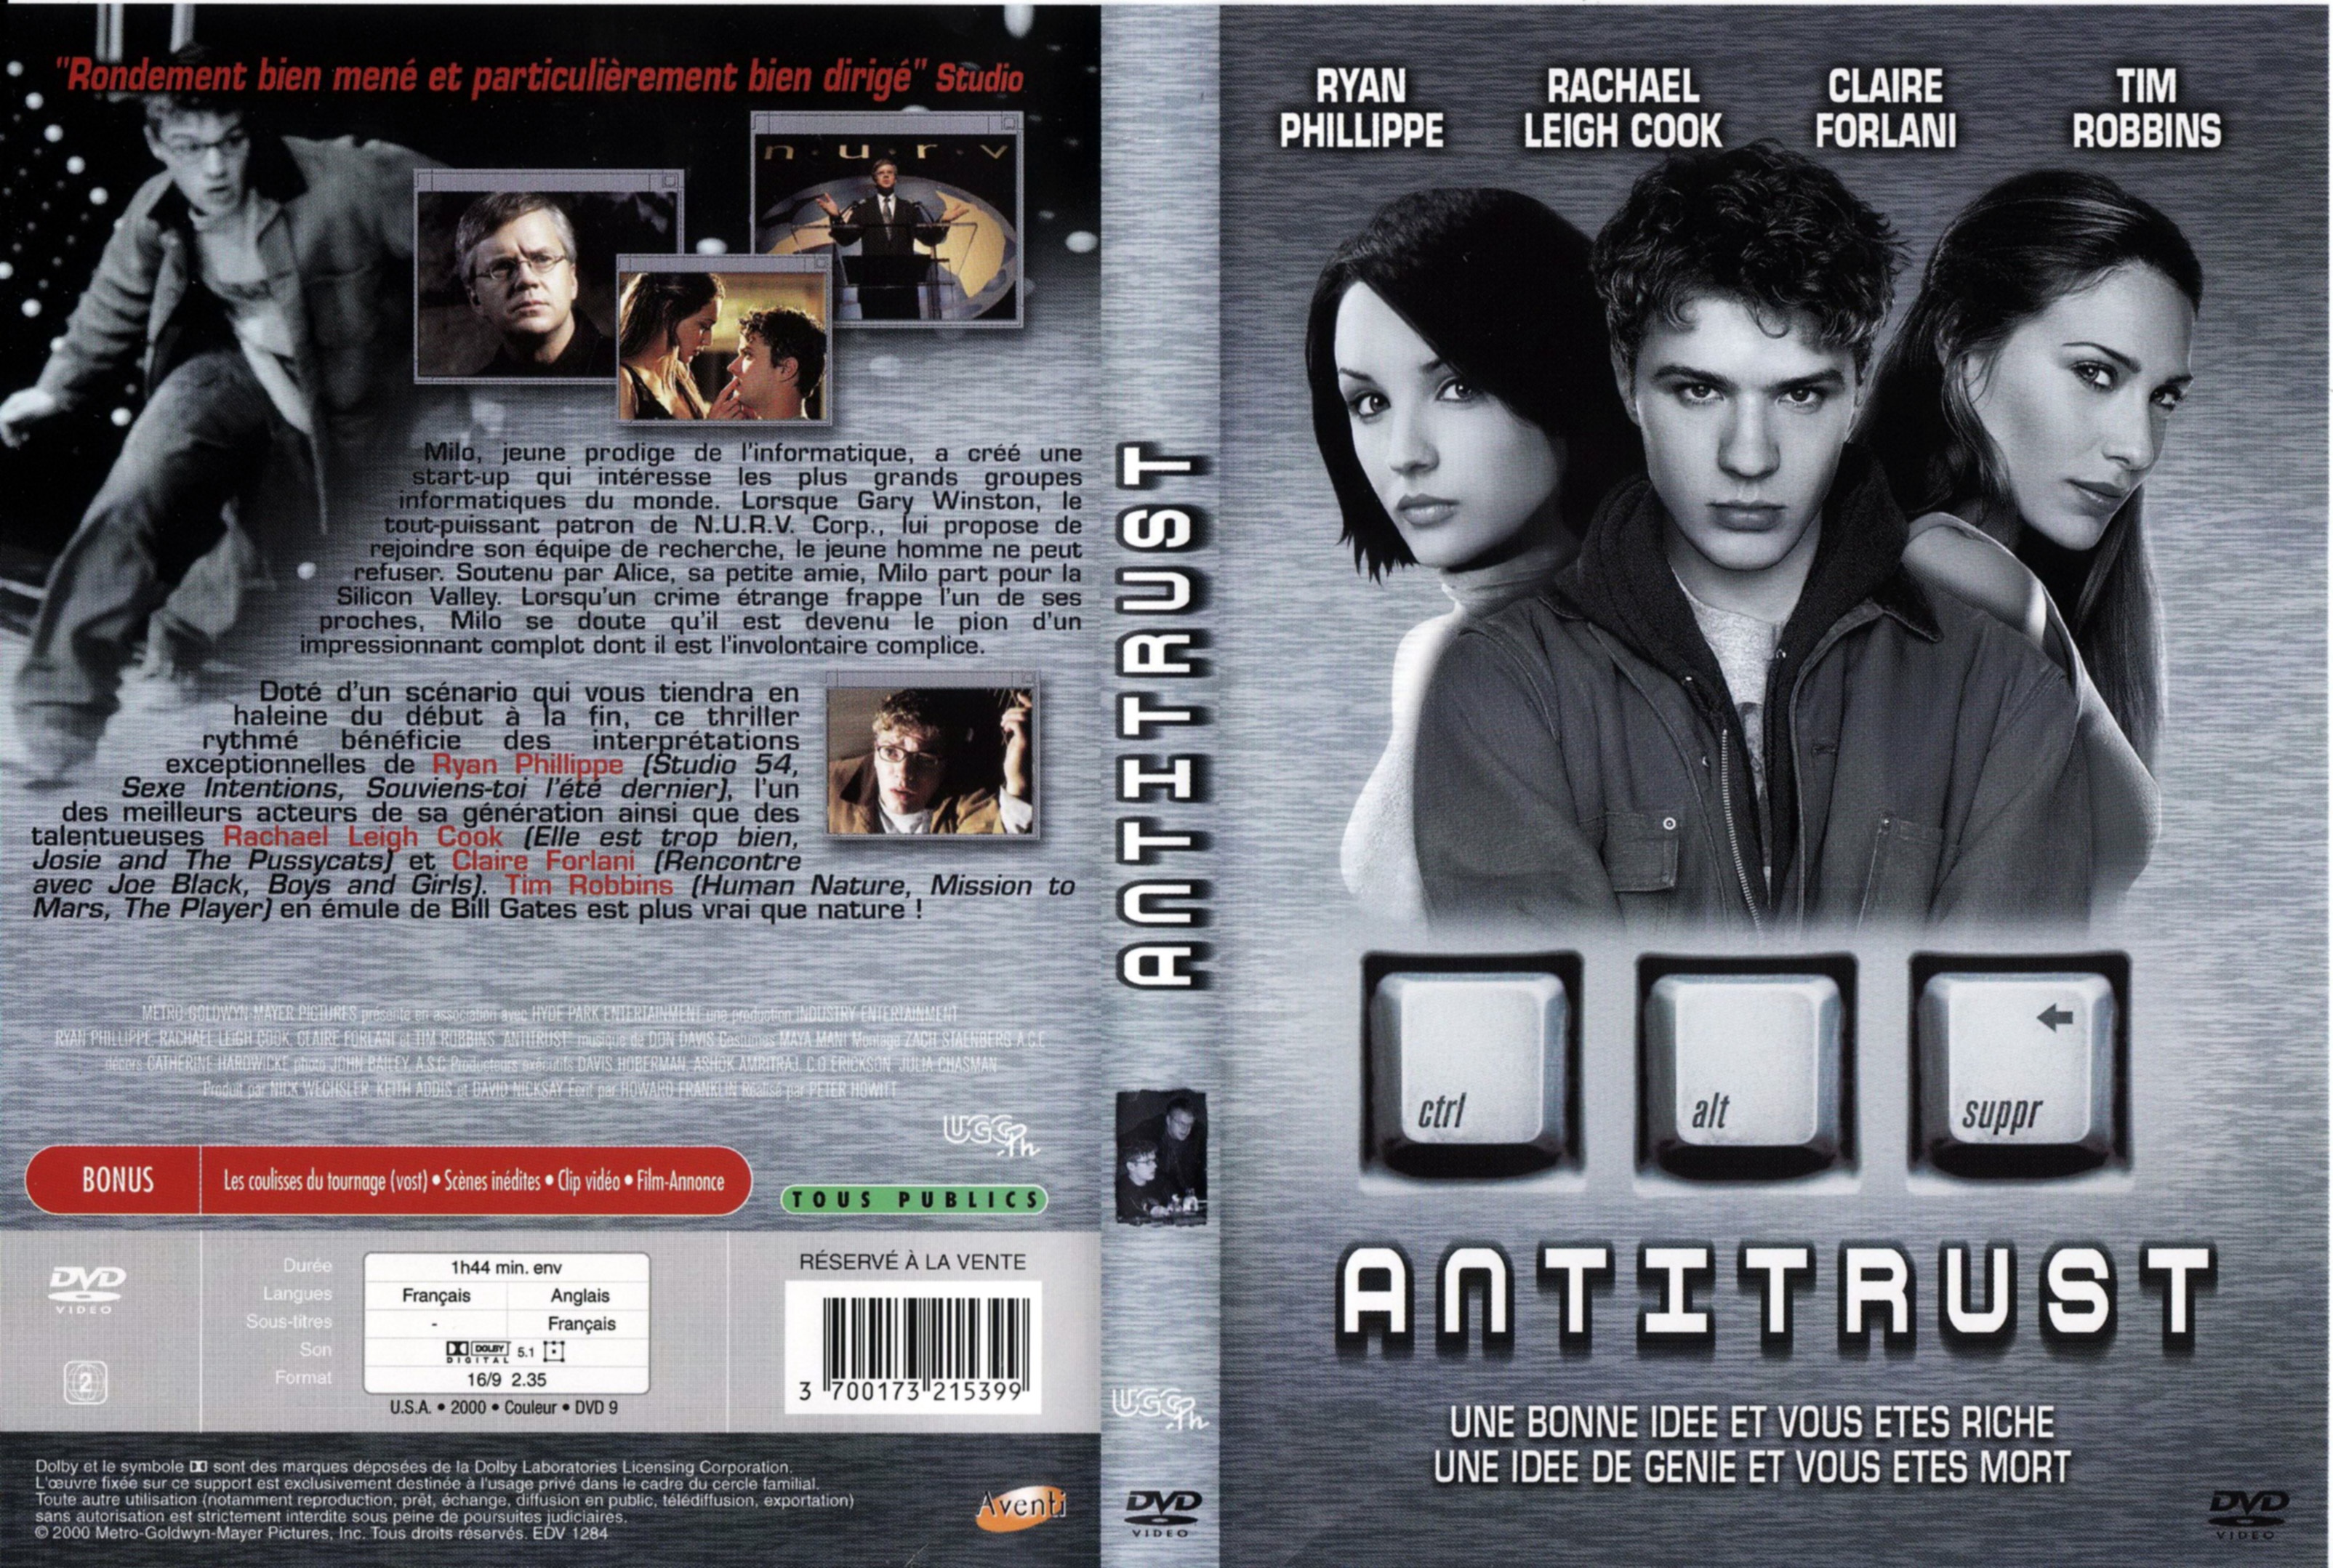 Jaquette DVD Antitrust v4